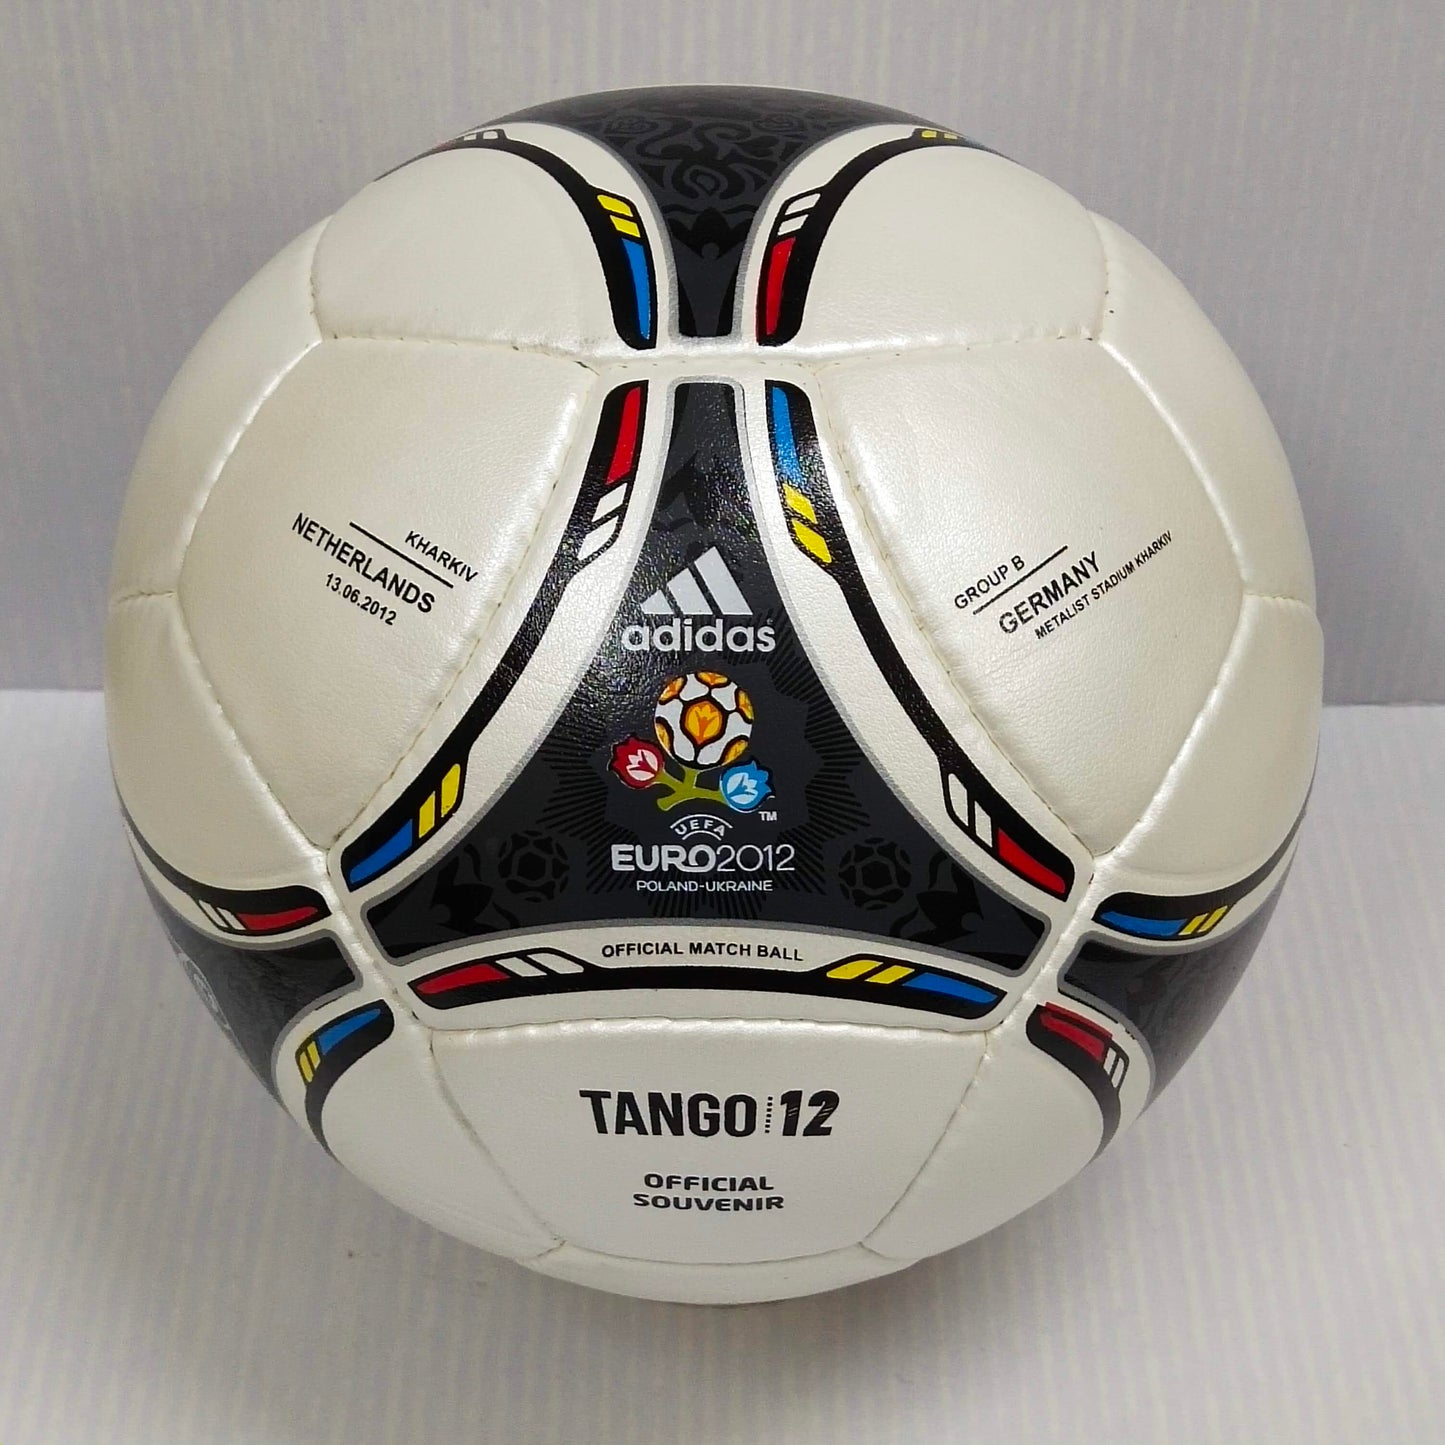 Adidas Tango 12 | 2012 | UEFA Europa League | Official Match Ball | Size 5 01